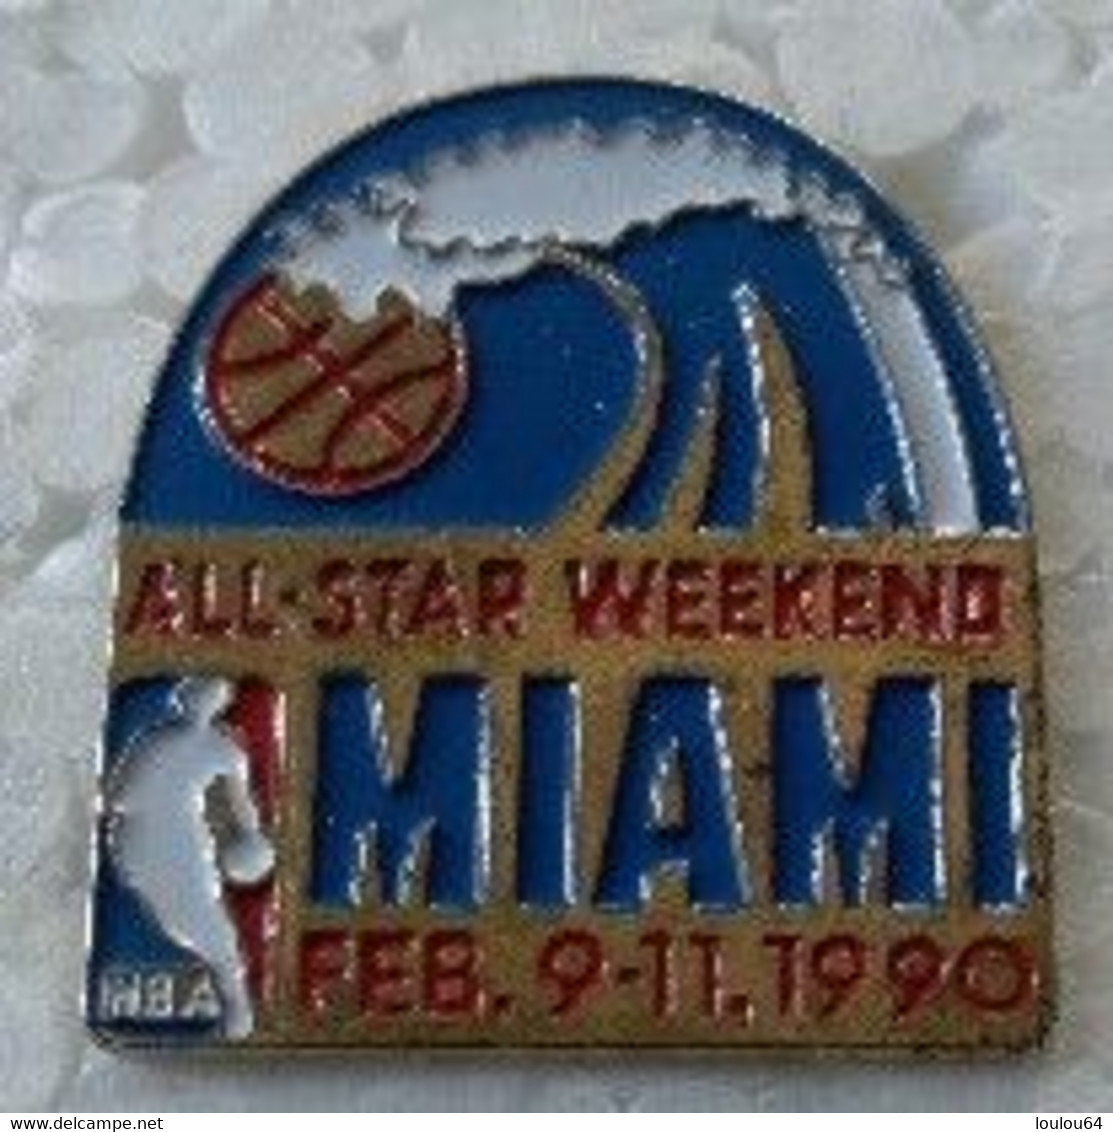 Pin's - Sports - Basketball - ALL-STAR WEEKEND - MIAMI - FEB. 9-11,1990 - - Basketball